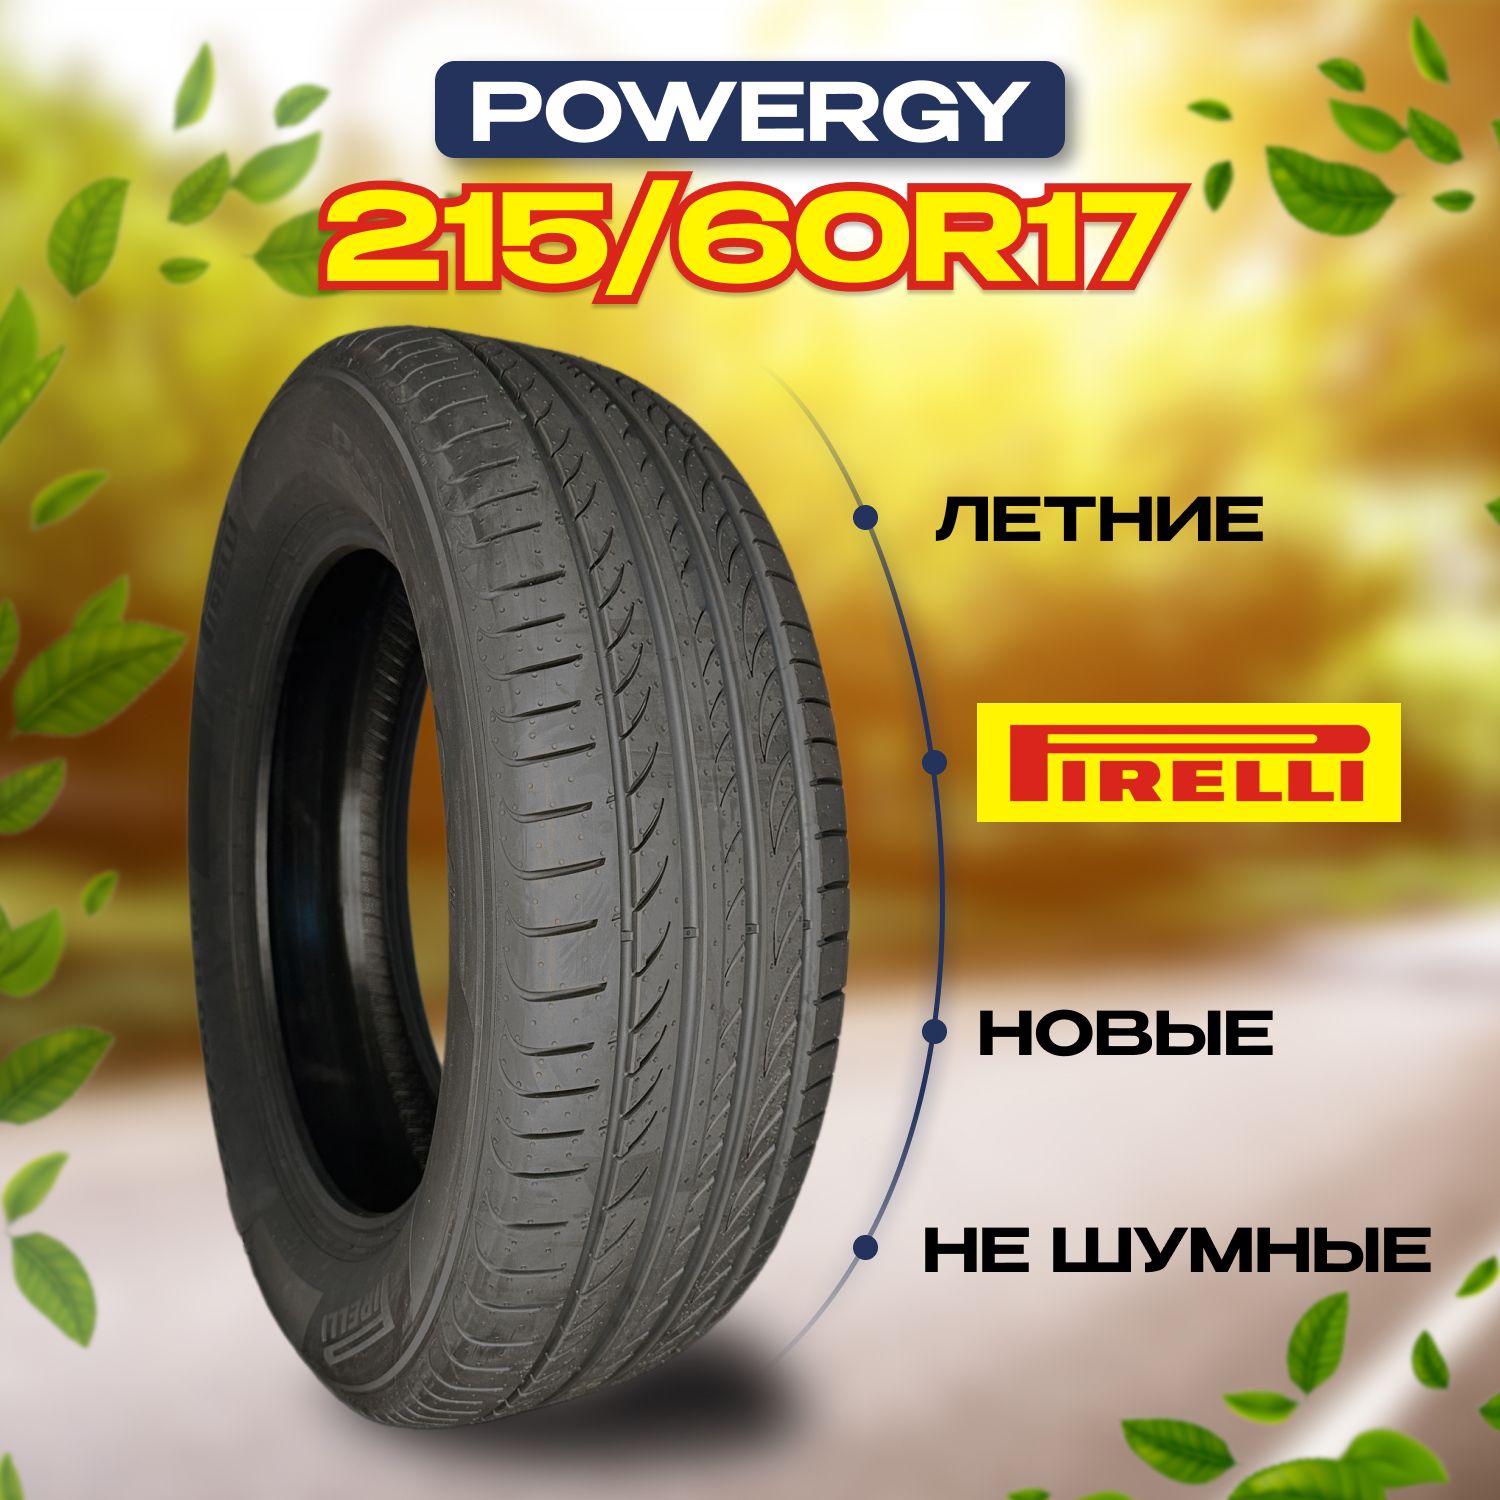 Pirelli powergy 225 60 r18